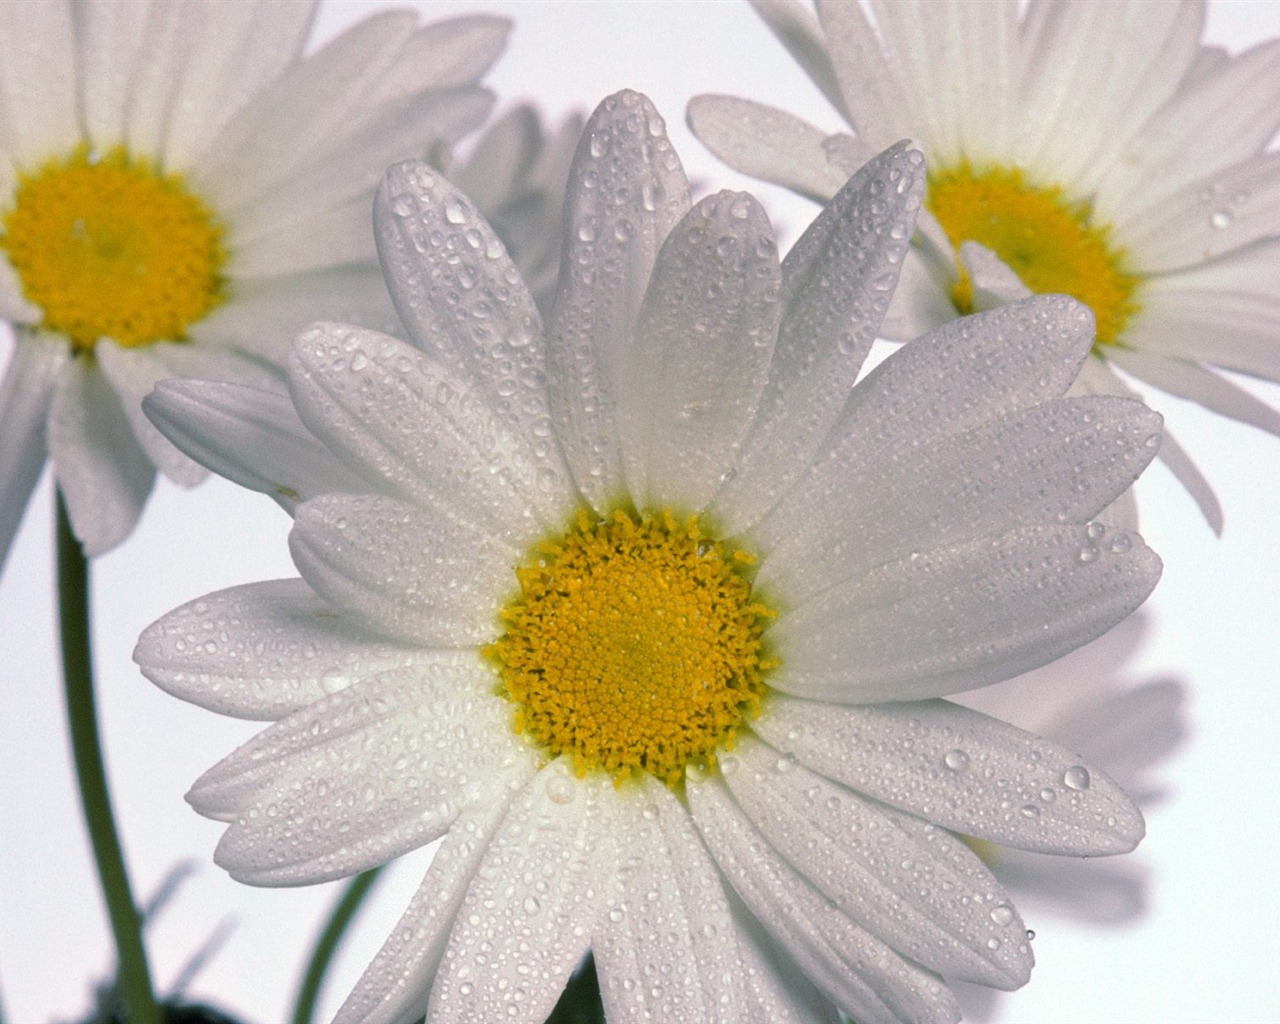 Flowers close-up (9) #5 - 1280x1024